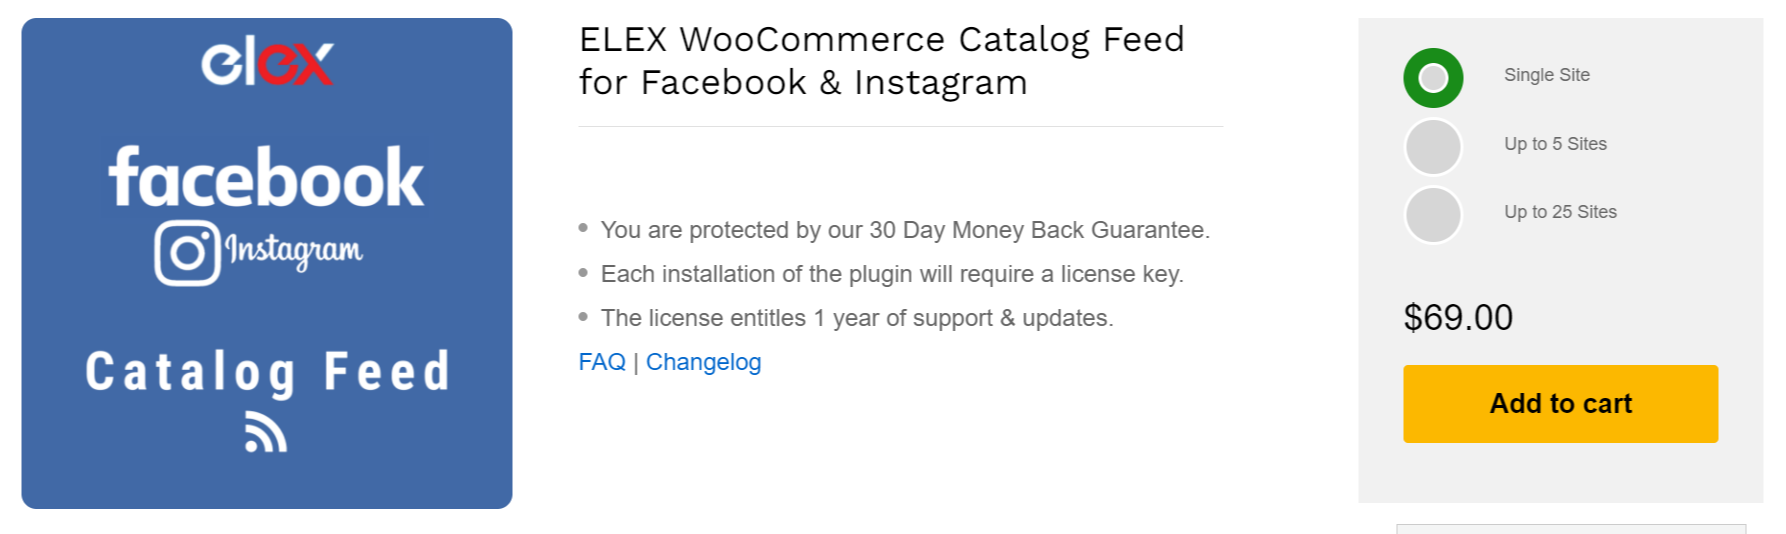 Facebook Ads | ELEX WooCommerce Catalog Feed for Facebook